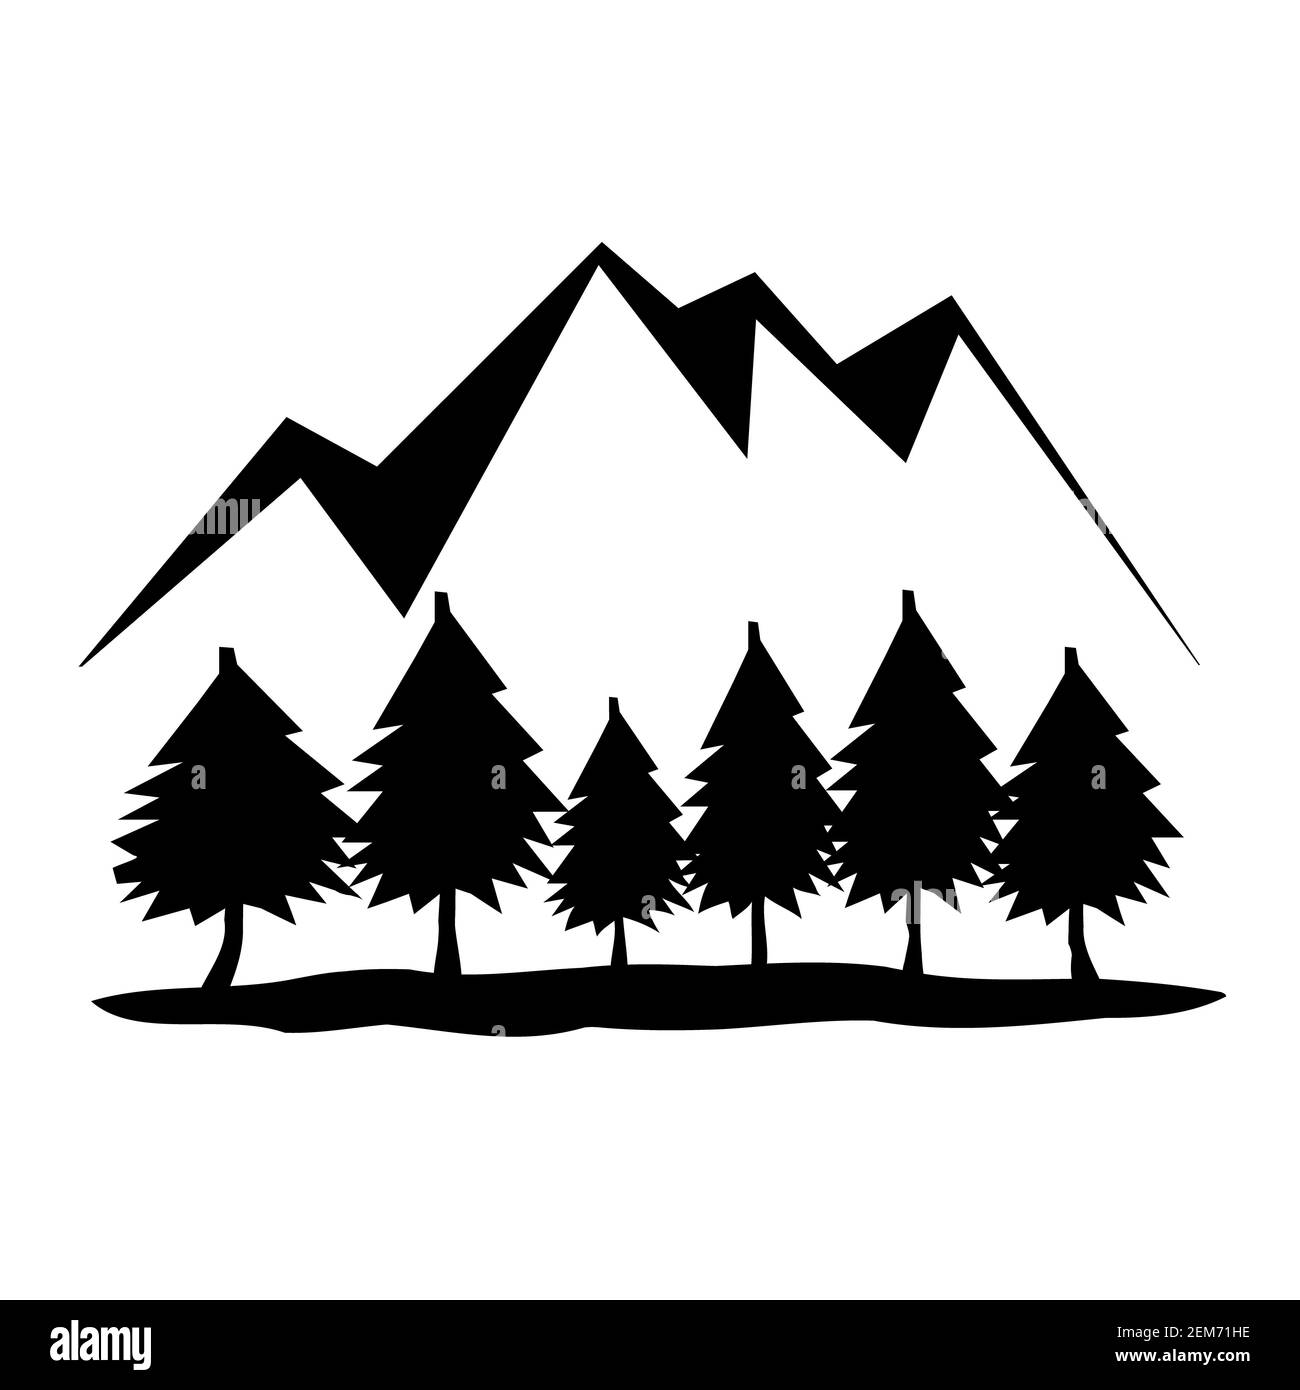 mountain icon on white background. flat style. mountain with pine trees symbol. rocks and peaks sign. Stock Photo